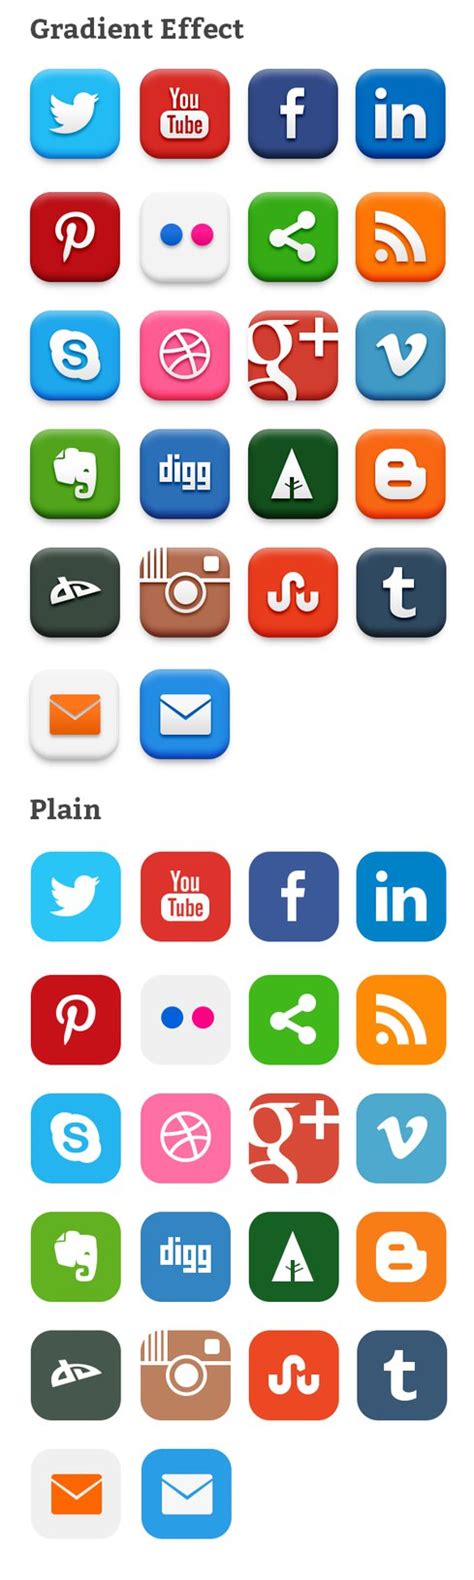 Free 20 Popular Social Media Icons Psd Titanui